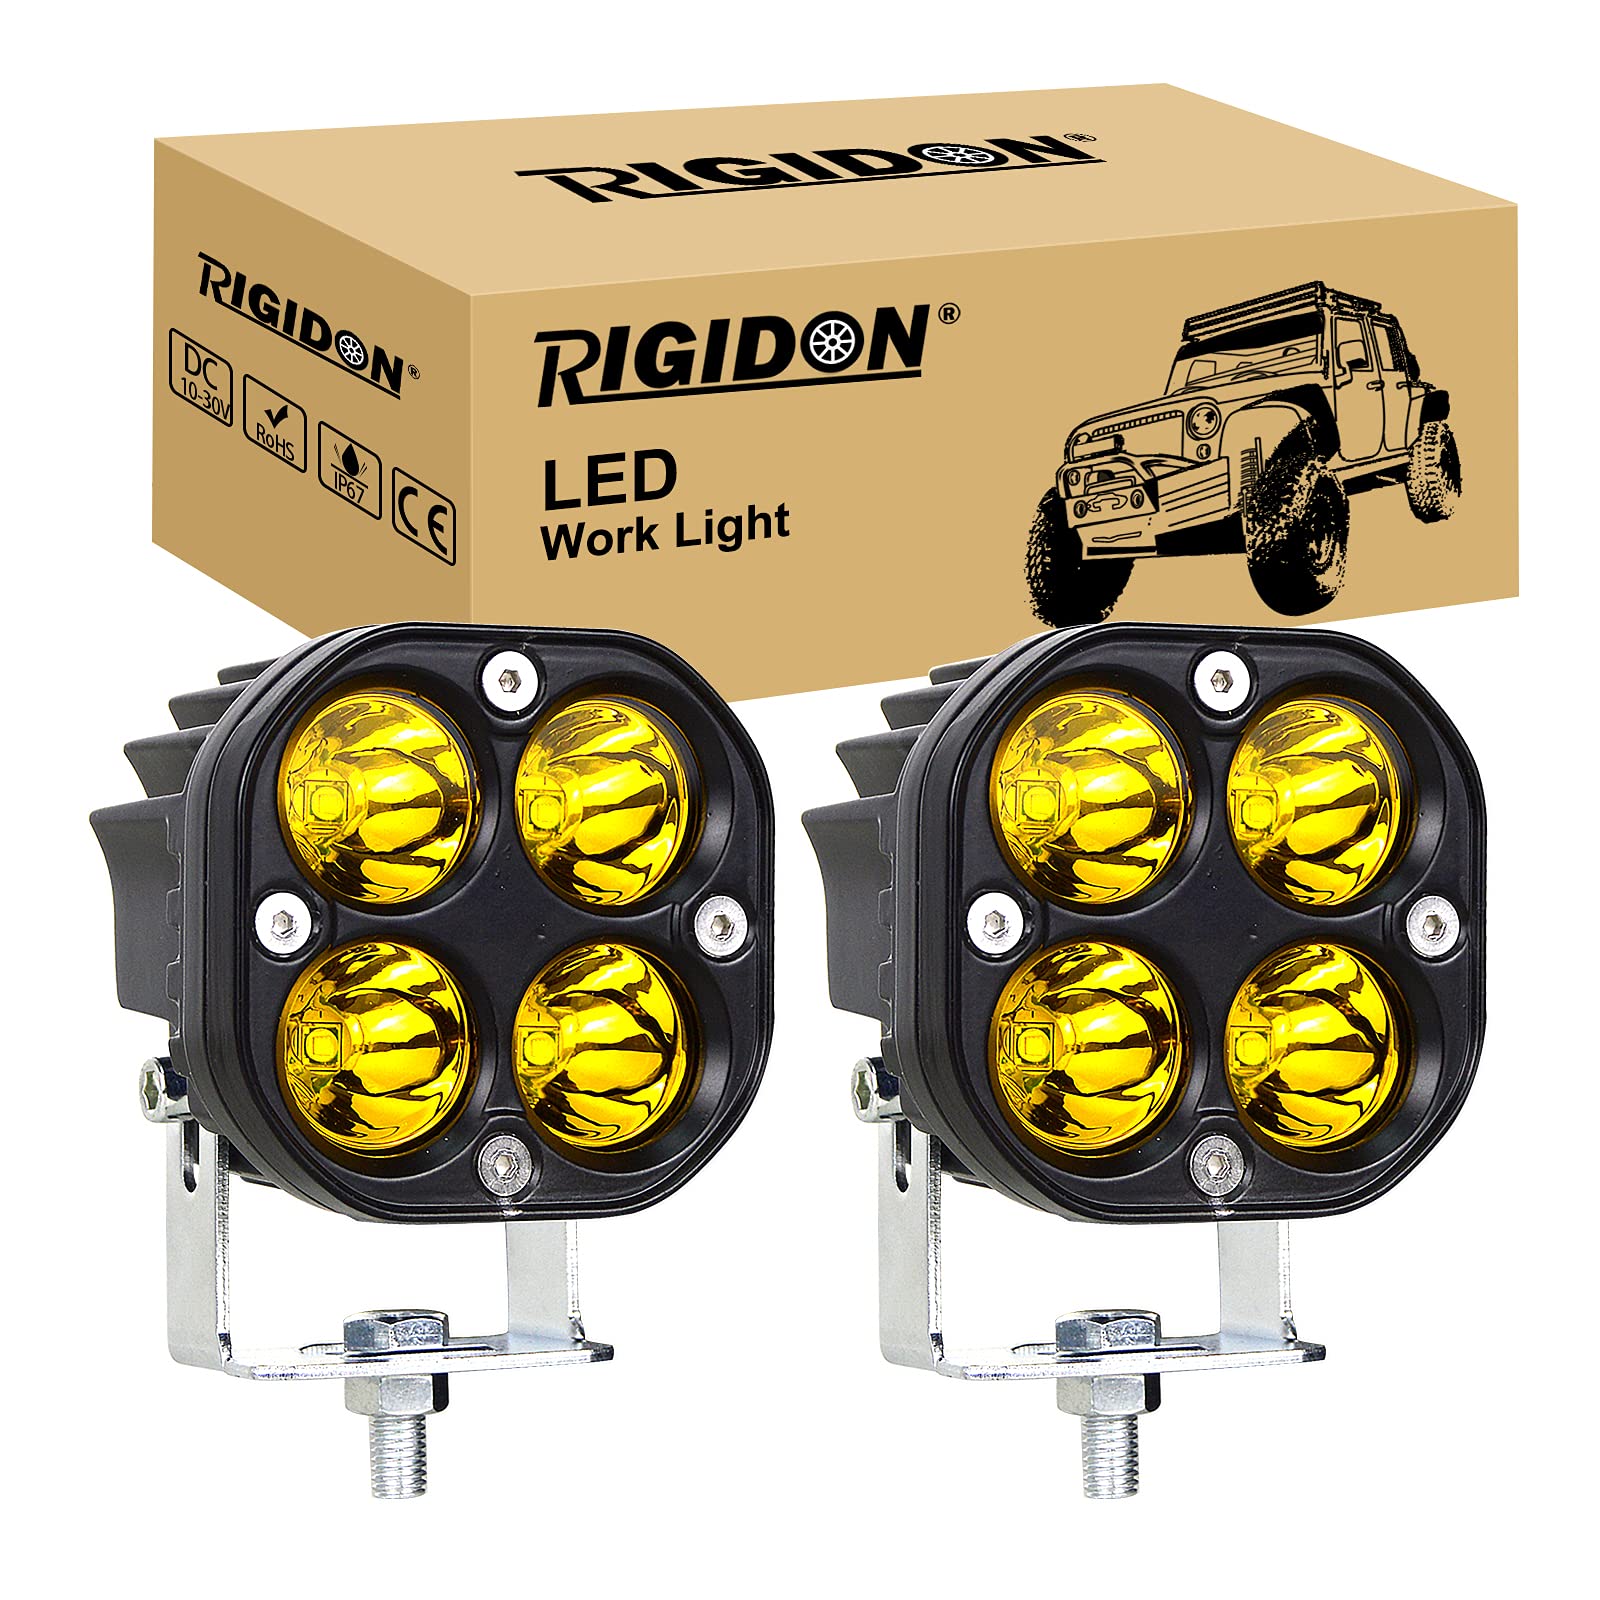 RIGIDON 2 Pcs Led arbeitslicht, 3 Zoll 40W Spot Strahler offroad beleuchtung für Auto SUV ATV Traktor LKW, 4x4 Fahrzeuge, Led nebelscheinwerfer, Led arbeitsscheinwerfer led scheinwerfer, 3000K Gelb von RIGIDON